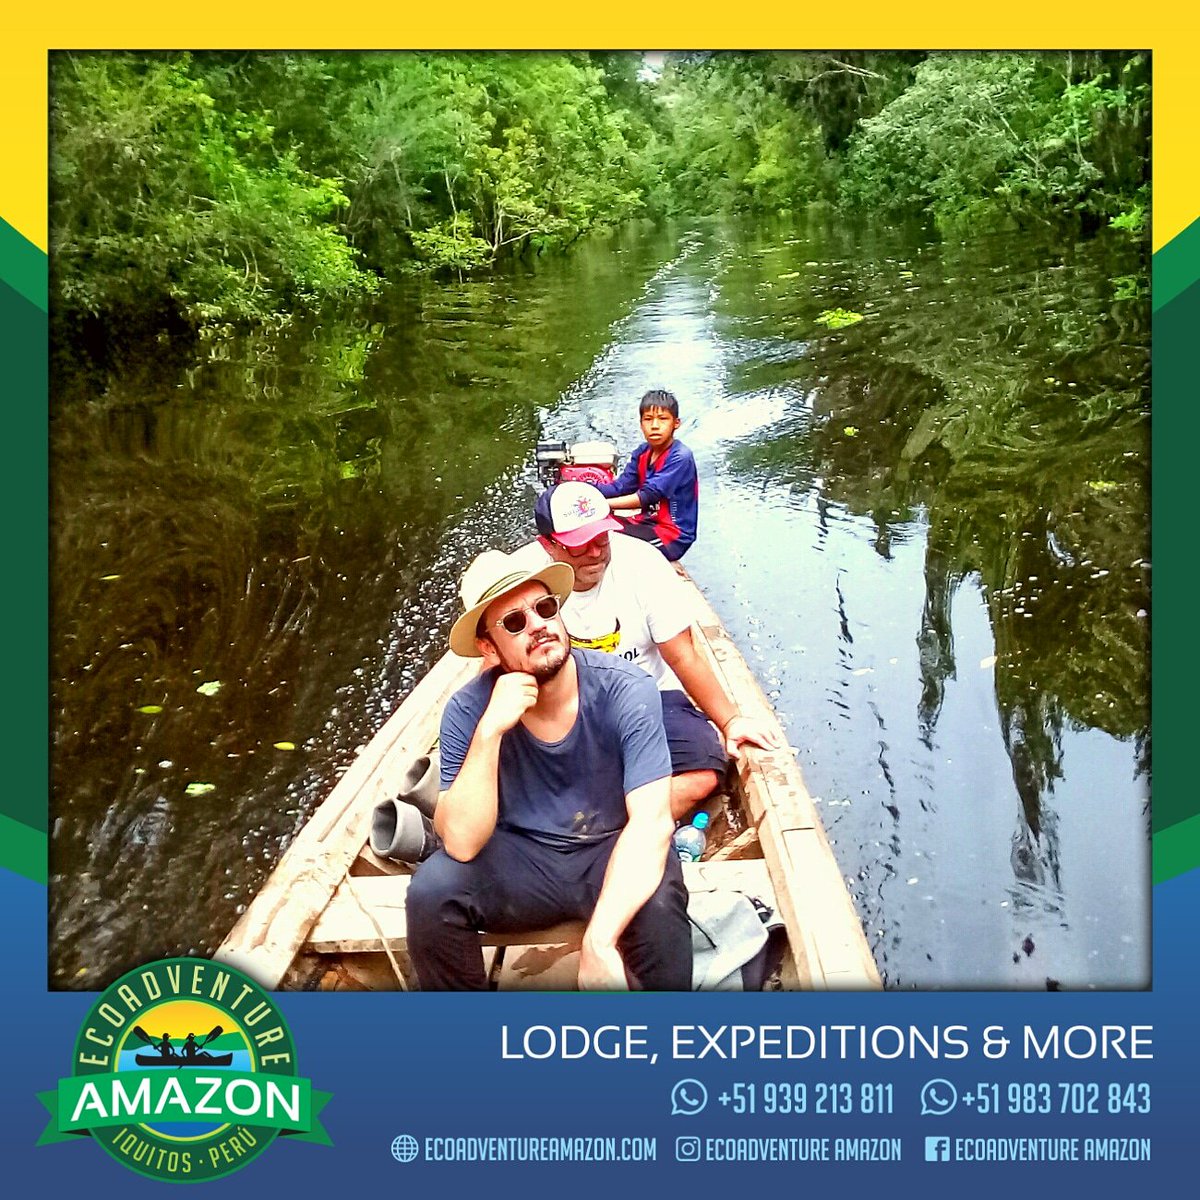 Amazon tours discover the rainforest
#amazontours #ecoadventureamazonlodge #agency #amazonrivers #navigate #explore